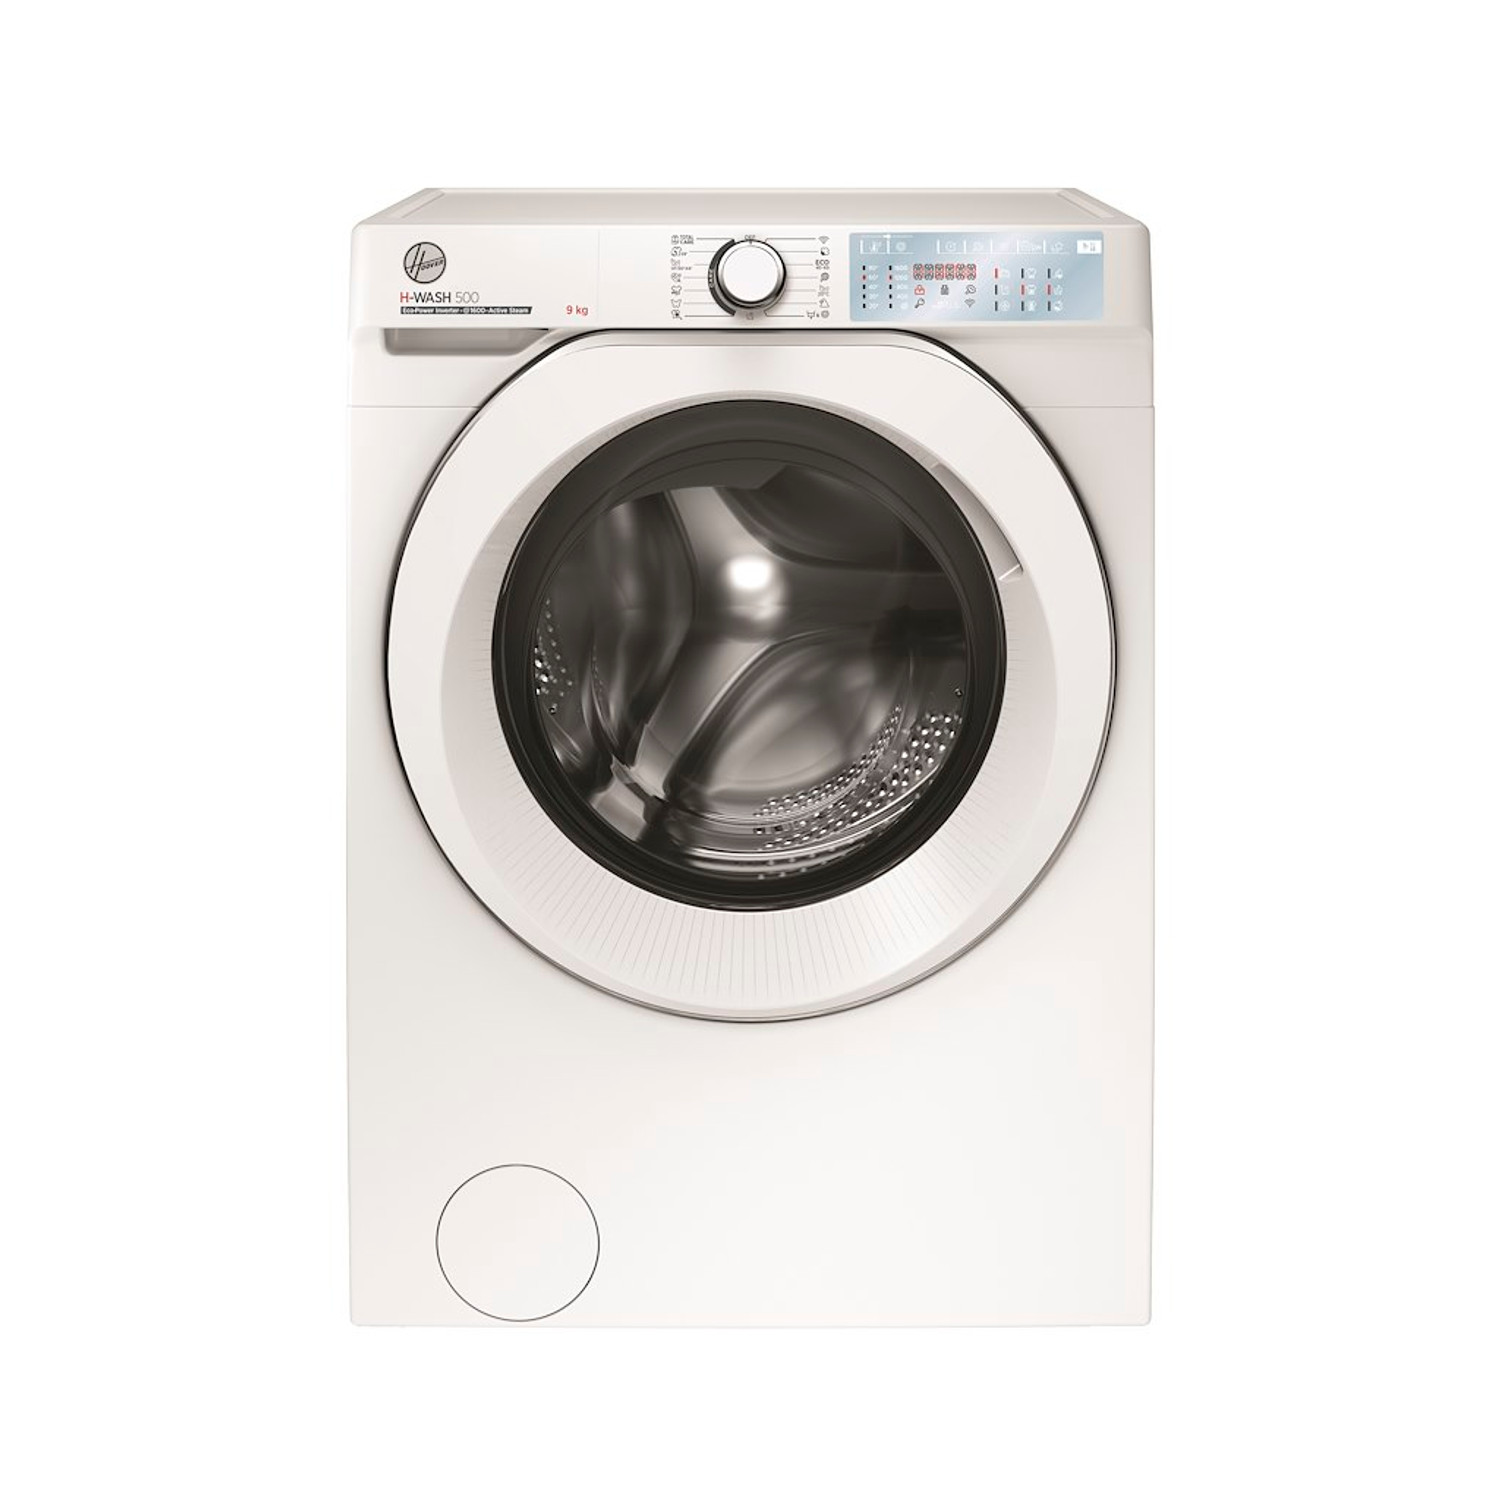 H-Wash 500 9KG 1600 Spin Washing Machine